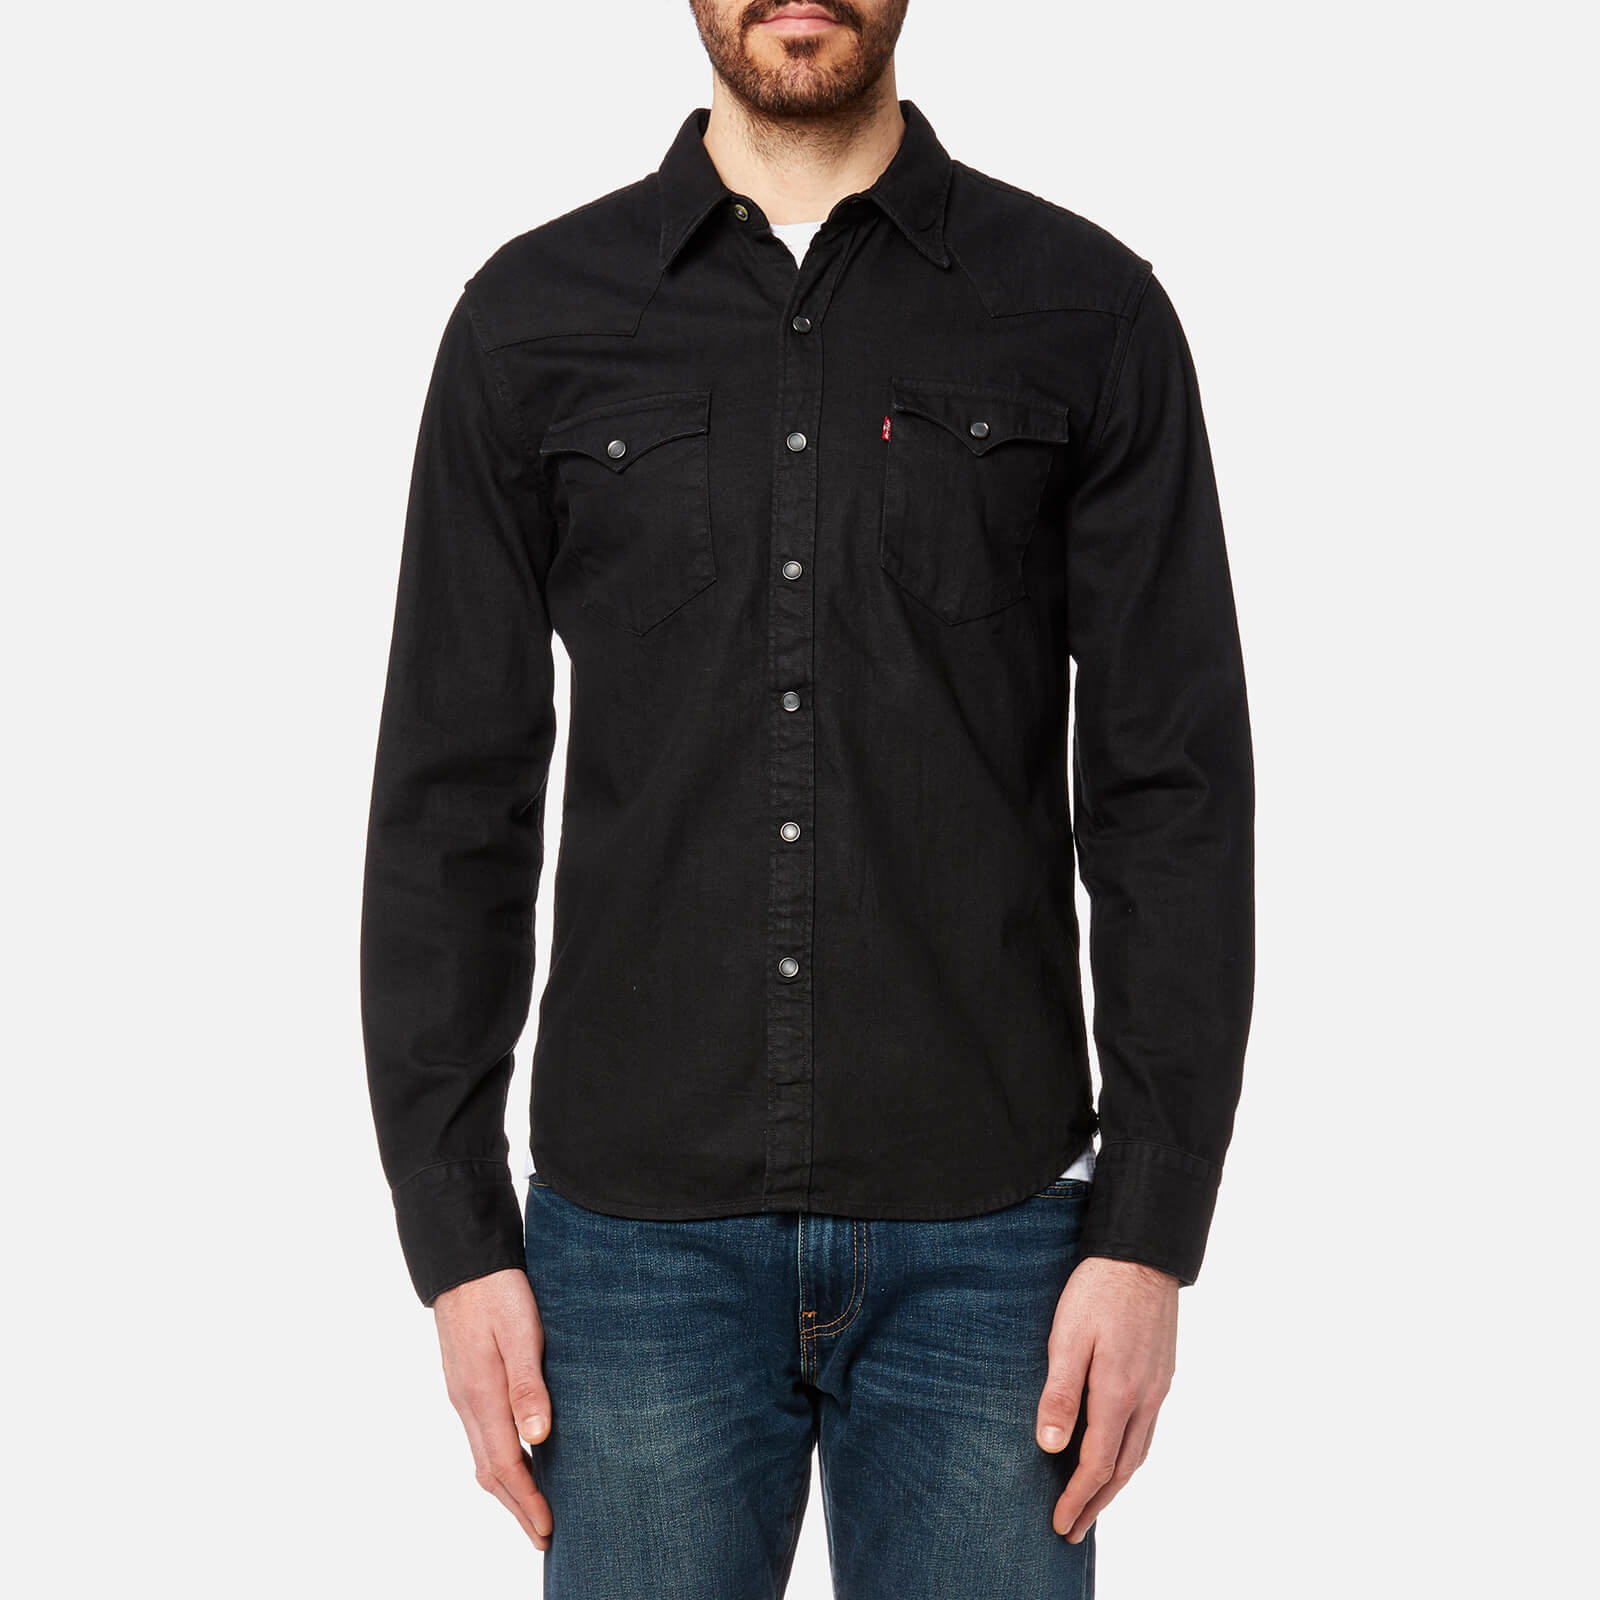 levis western shirt black